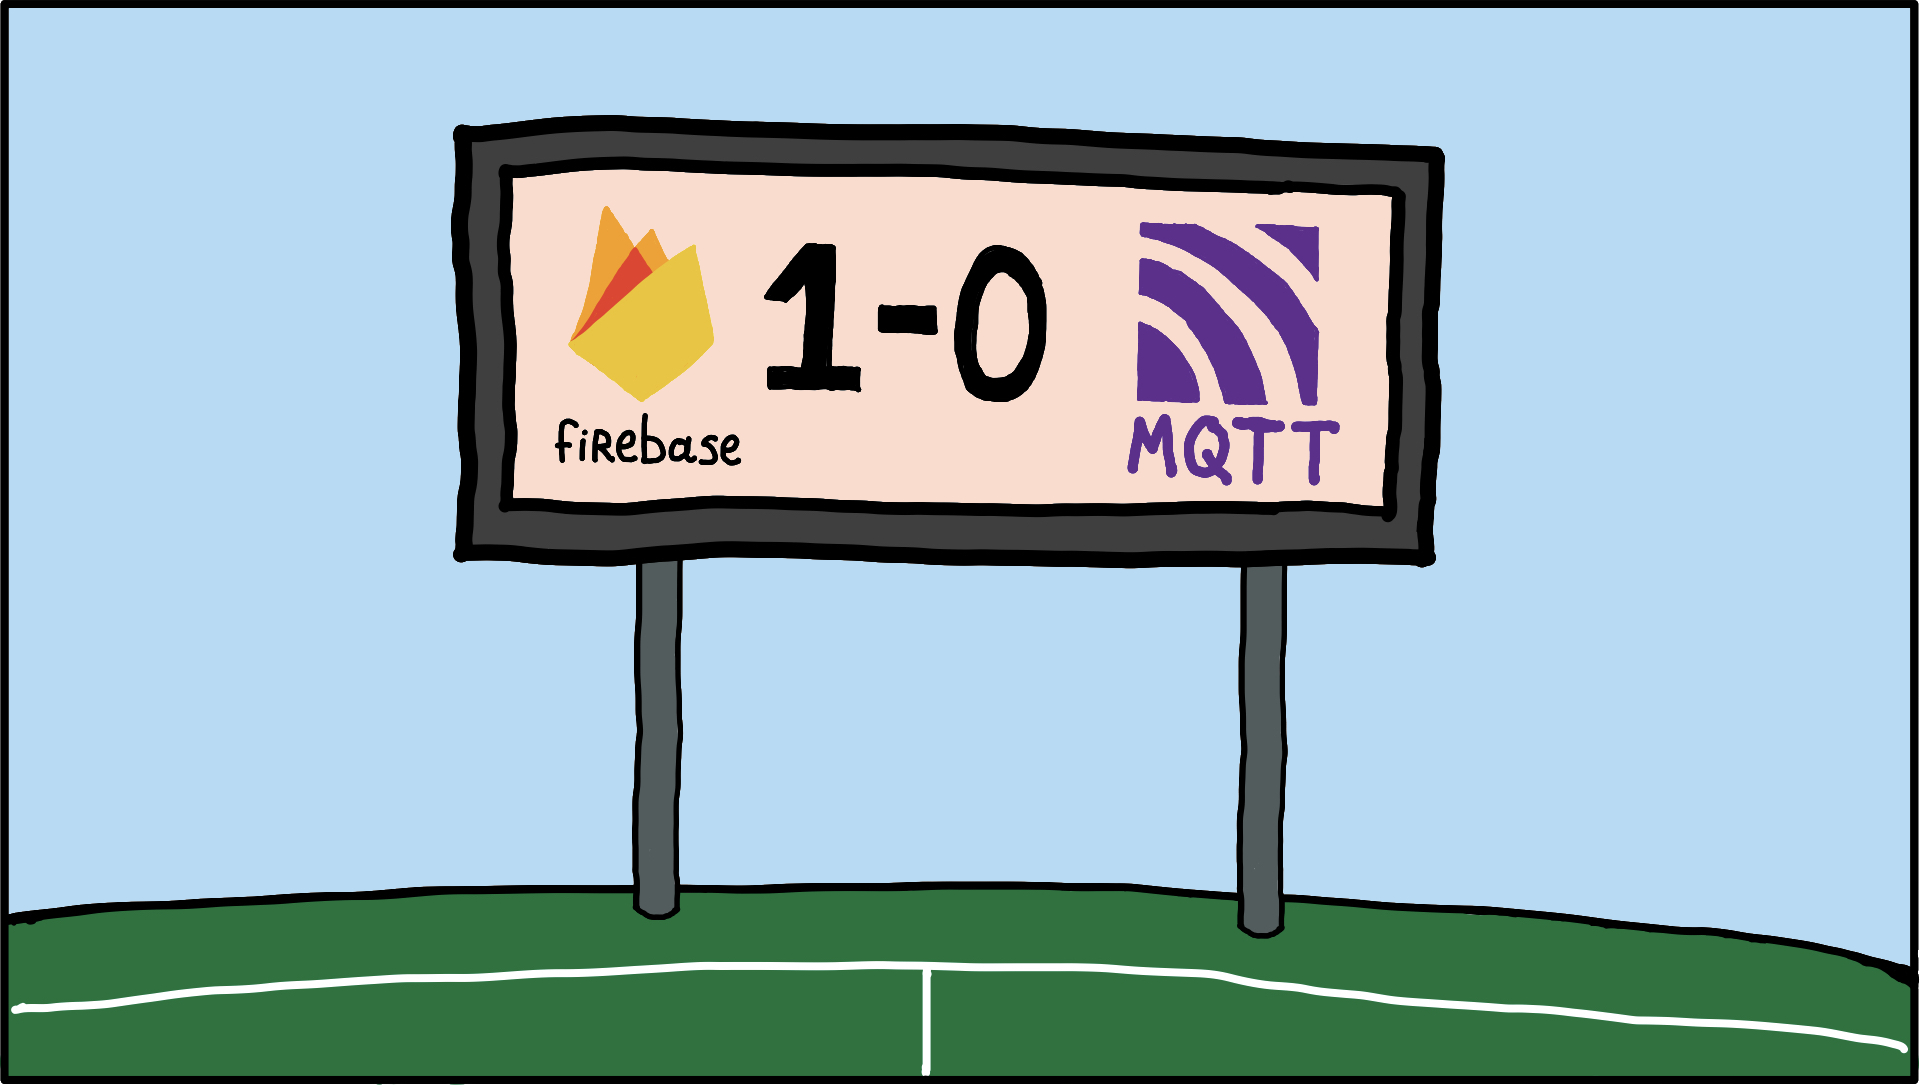 Scoreboard with Firebase winning 1-0 against MQTT